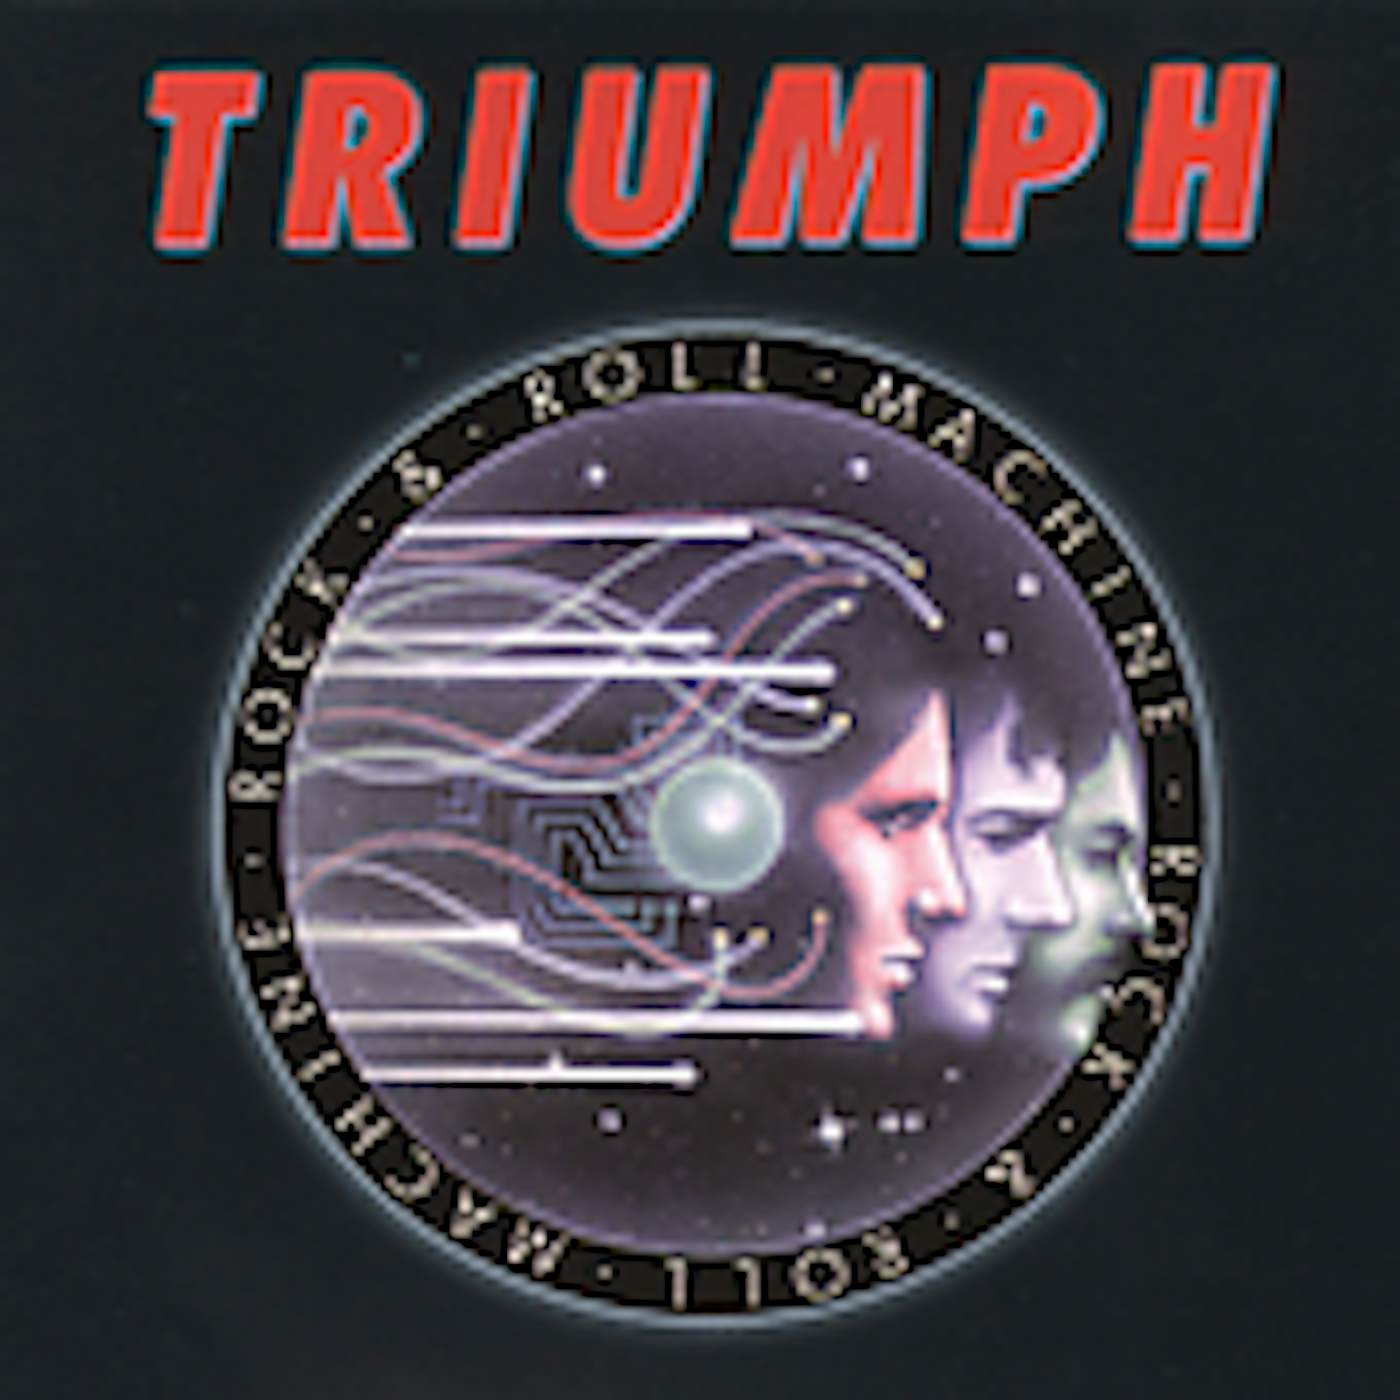 Triumph ROCK N ROLL MACHINE CD